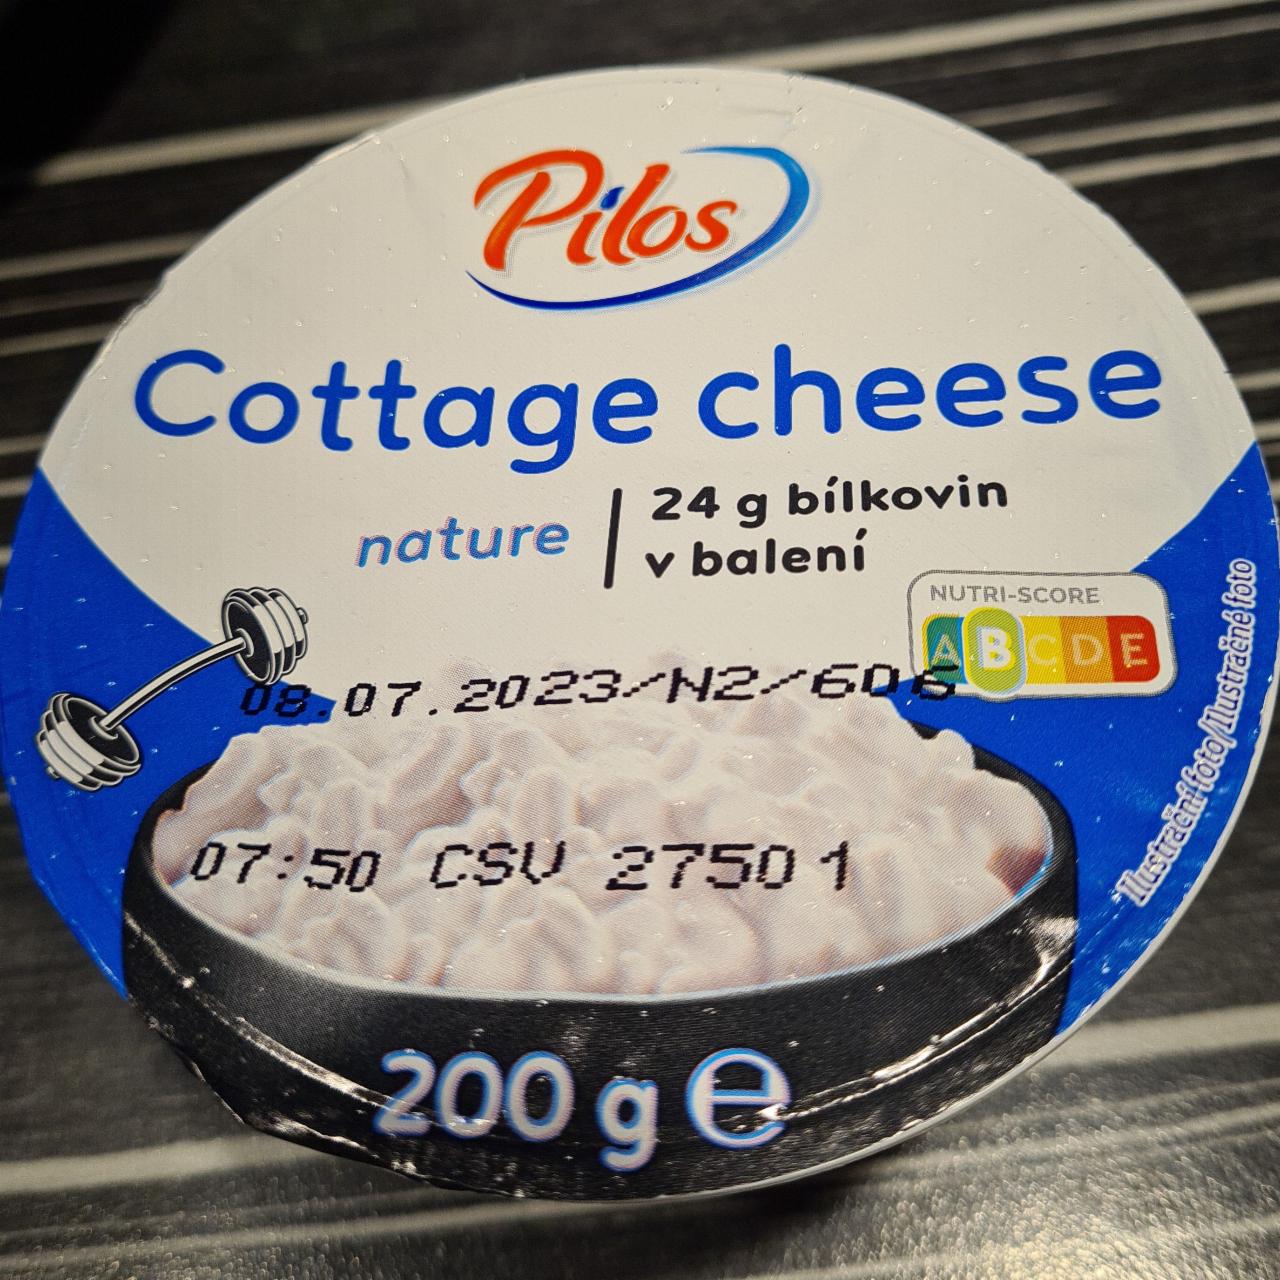 Фото - Сир кисломолочний 4.2% Cottage Cheese Nature Pilos